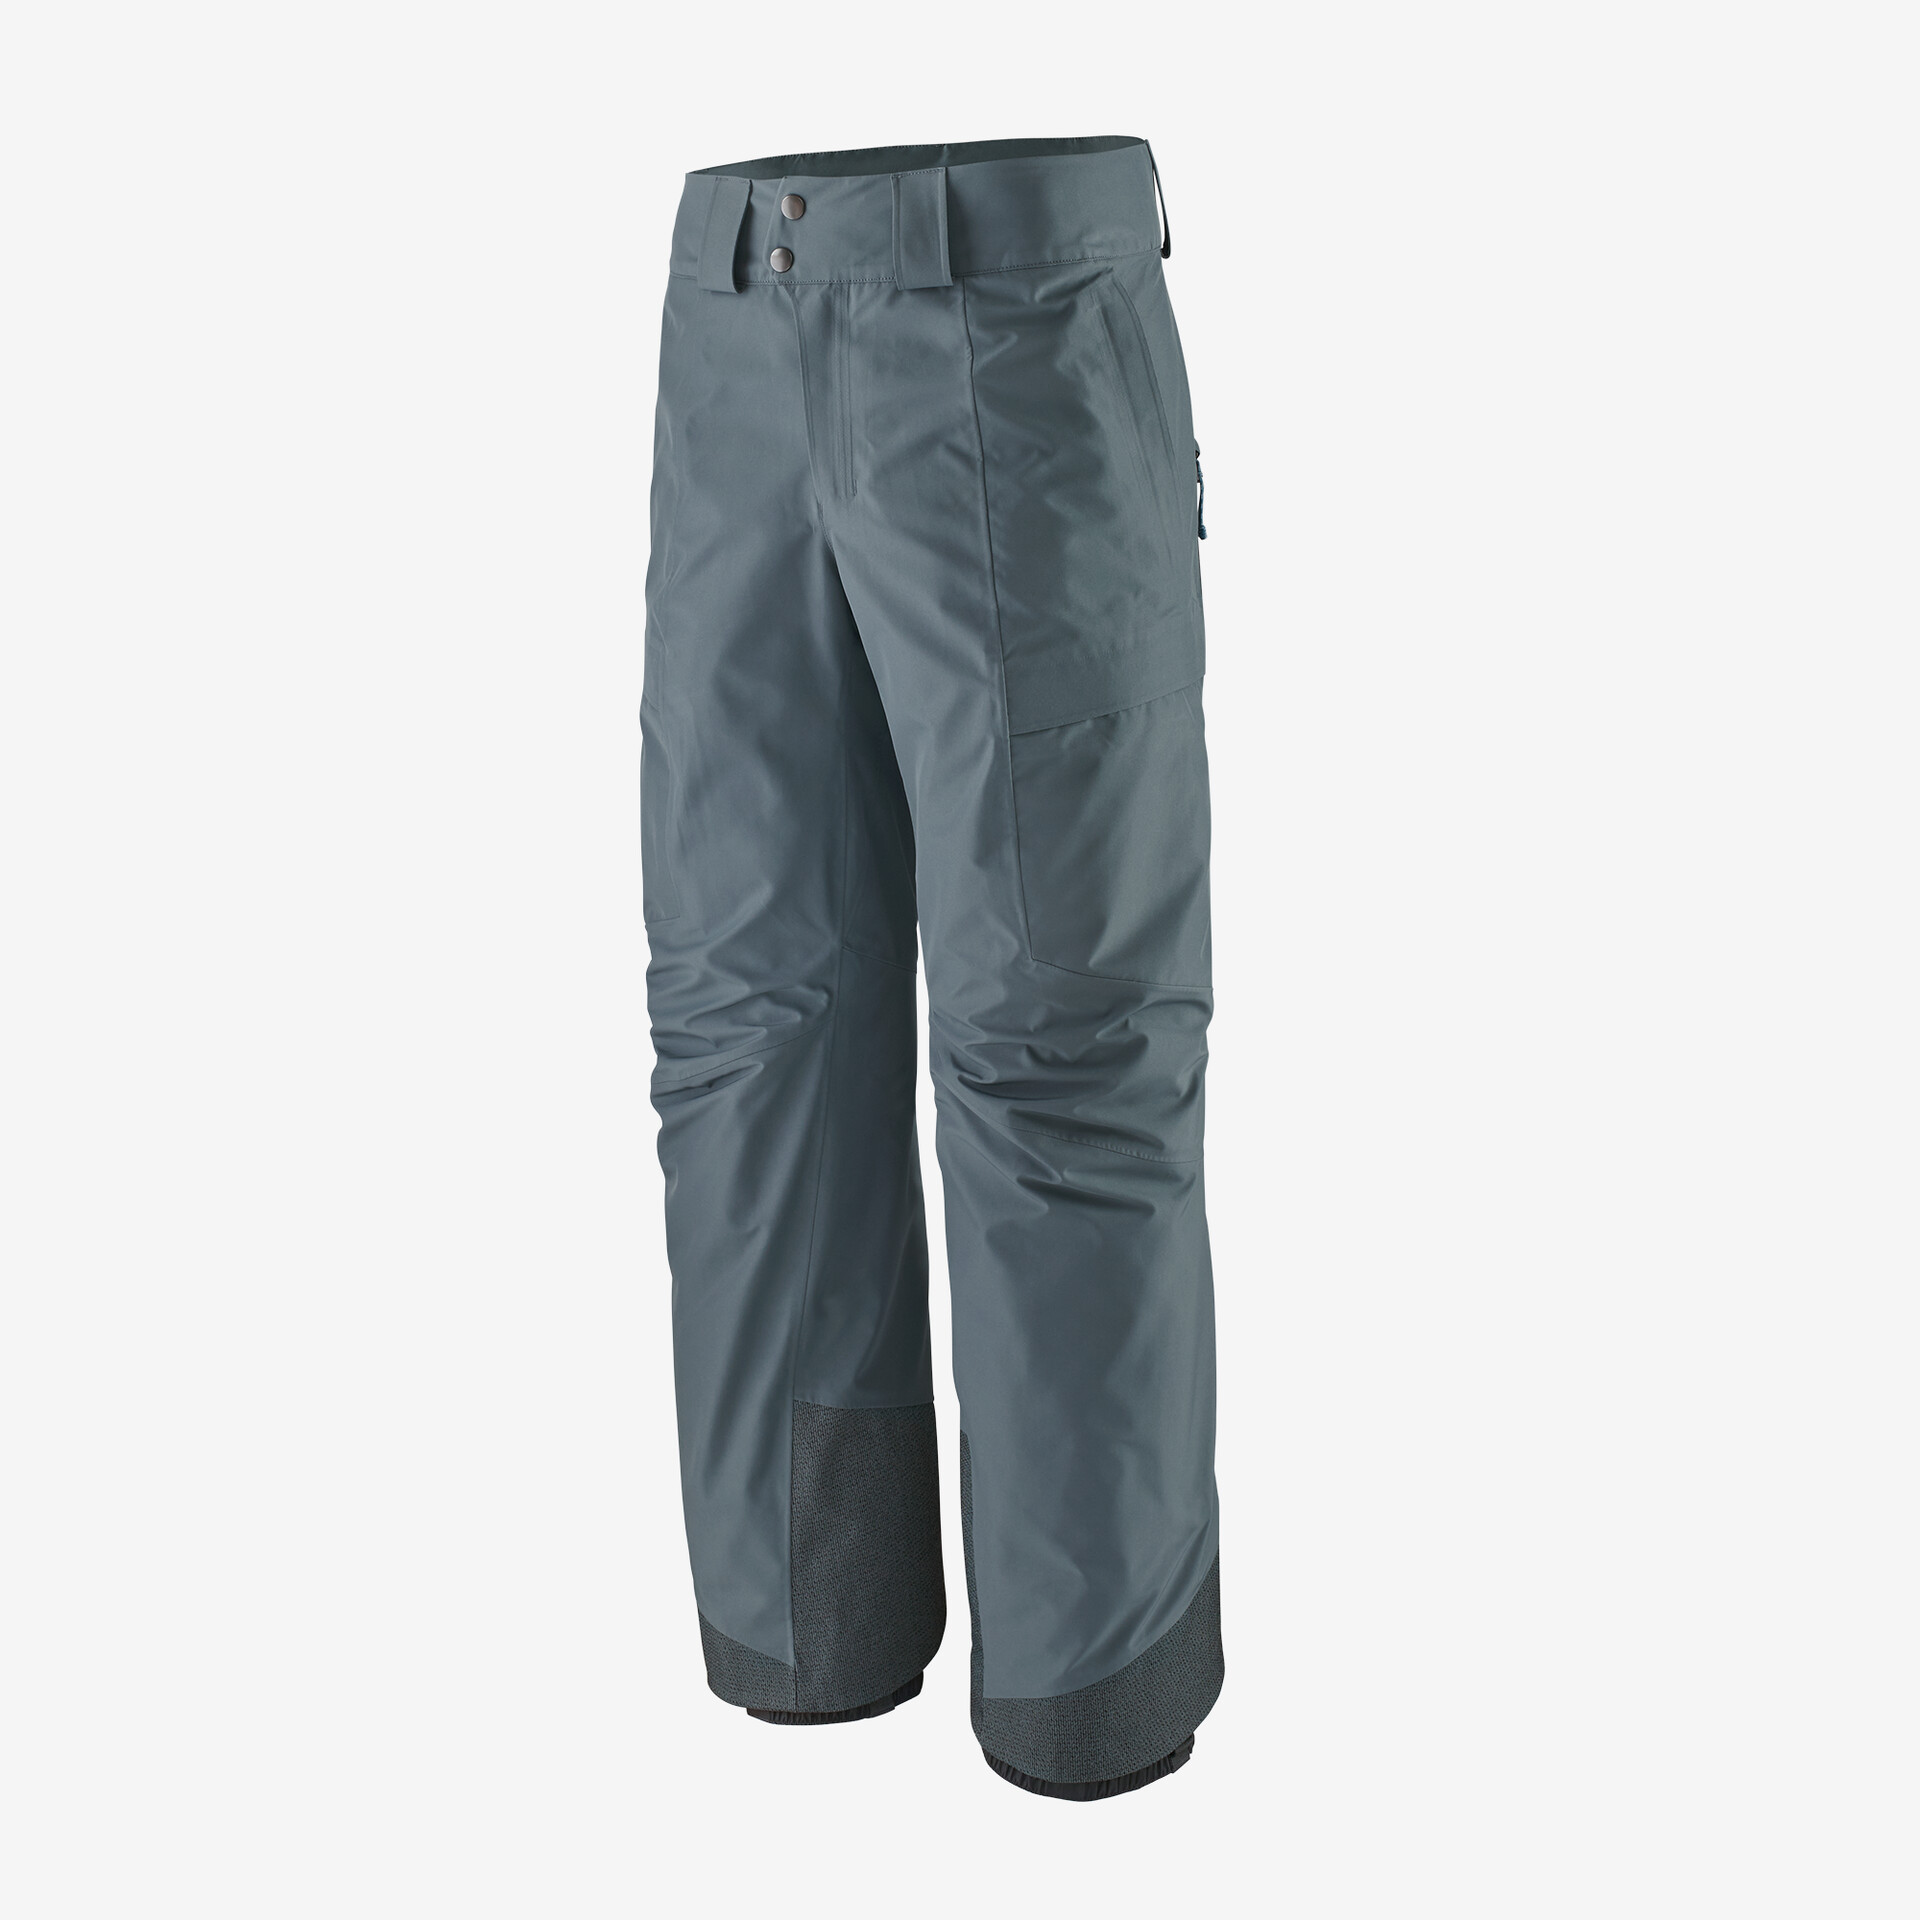 Мужские брюки Storm Shift Patagonia, серый